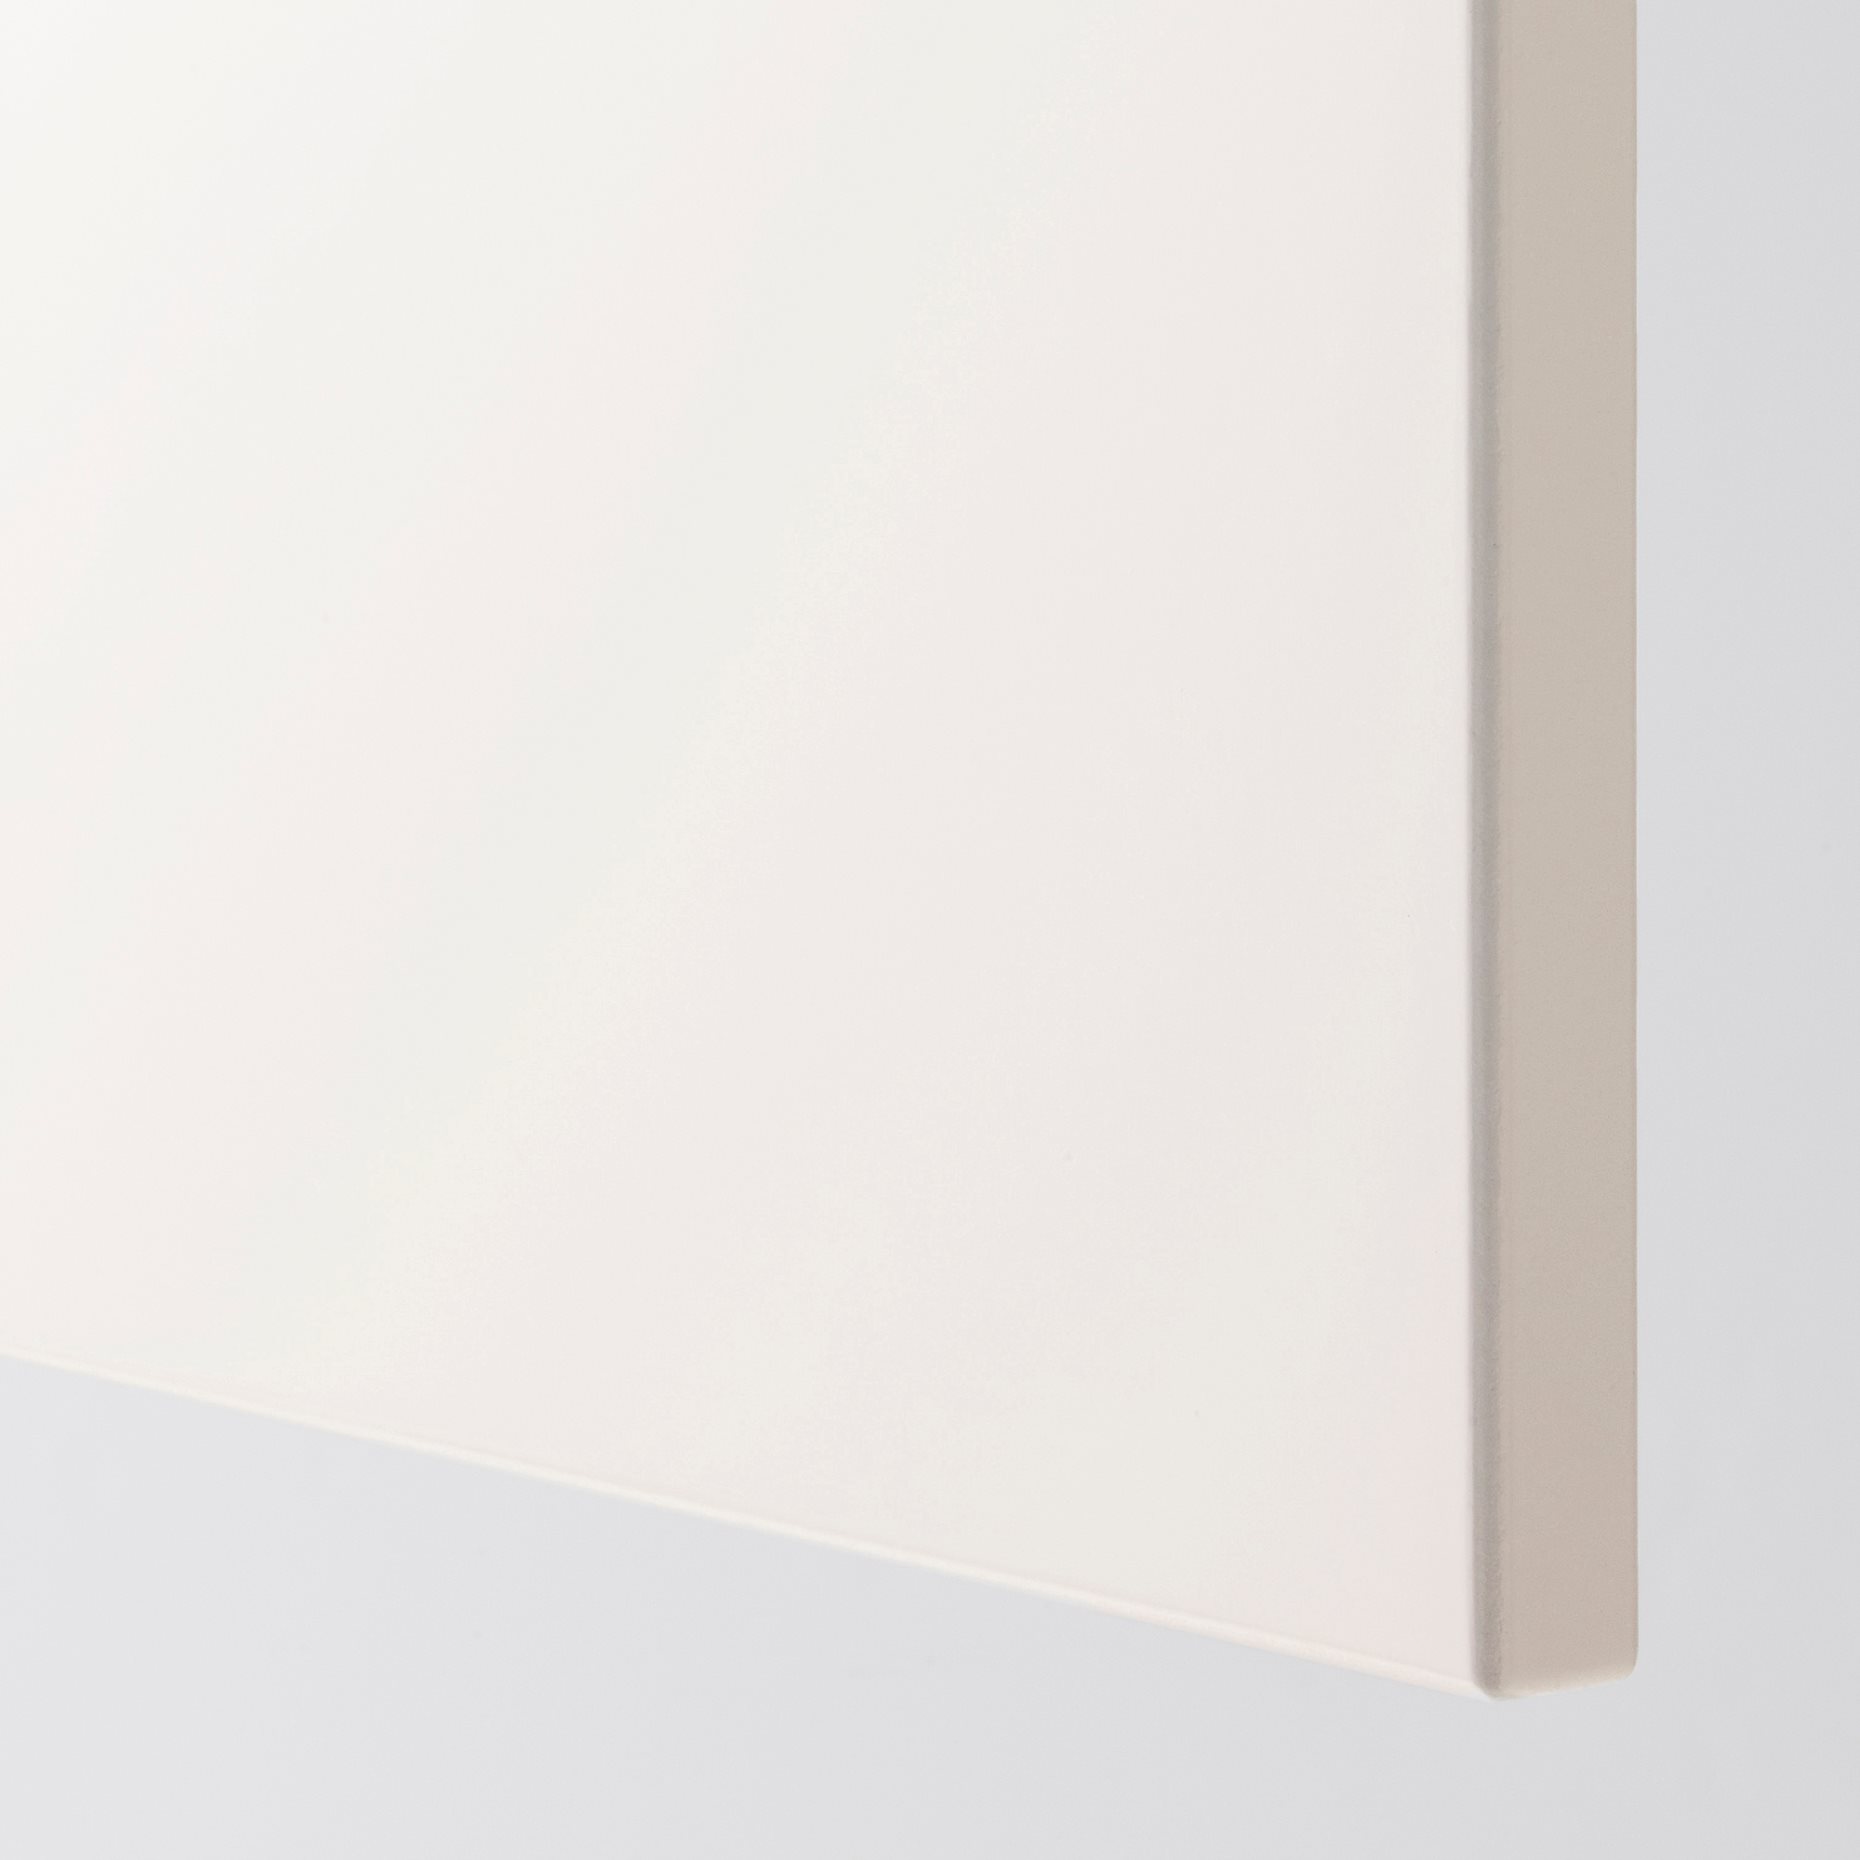 METOD, ντουλάπι τοίχου, 60x40 cm, 194.651.55